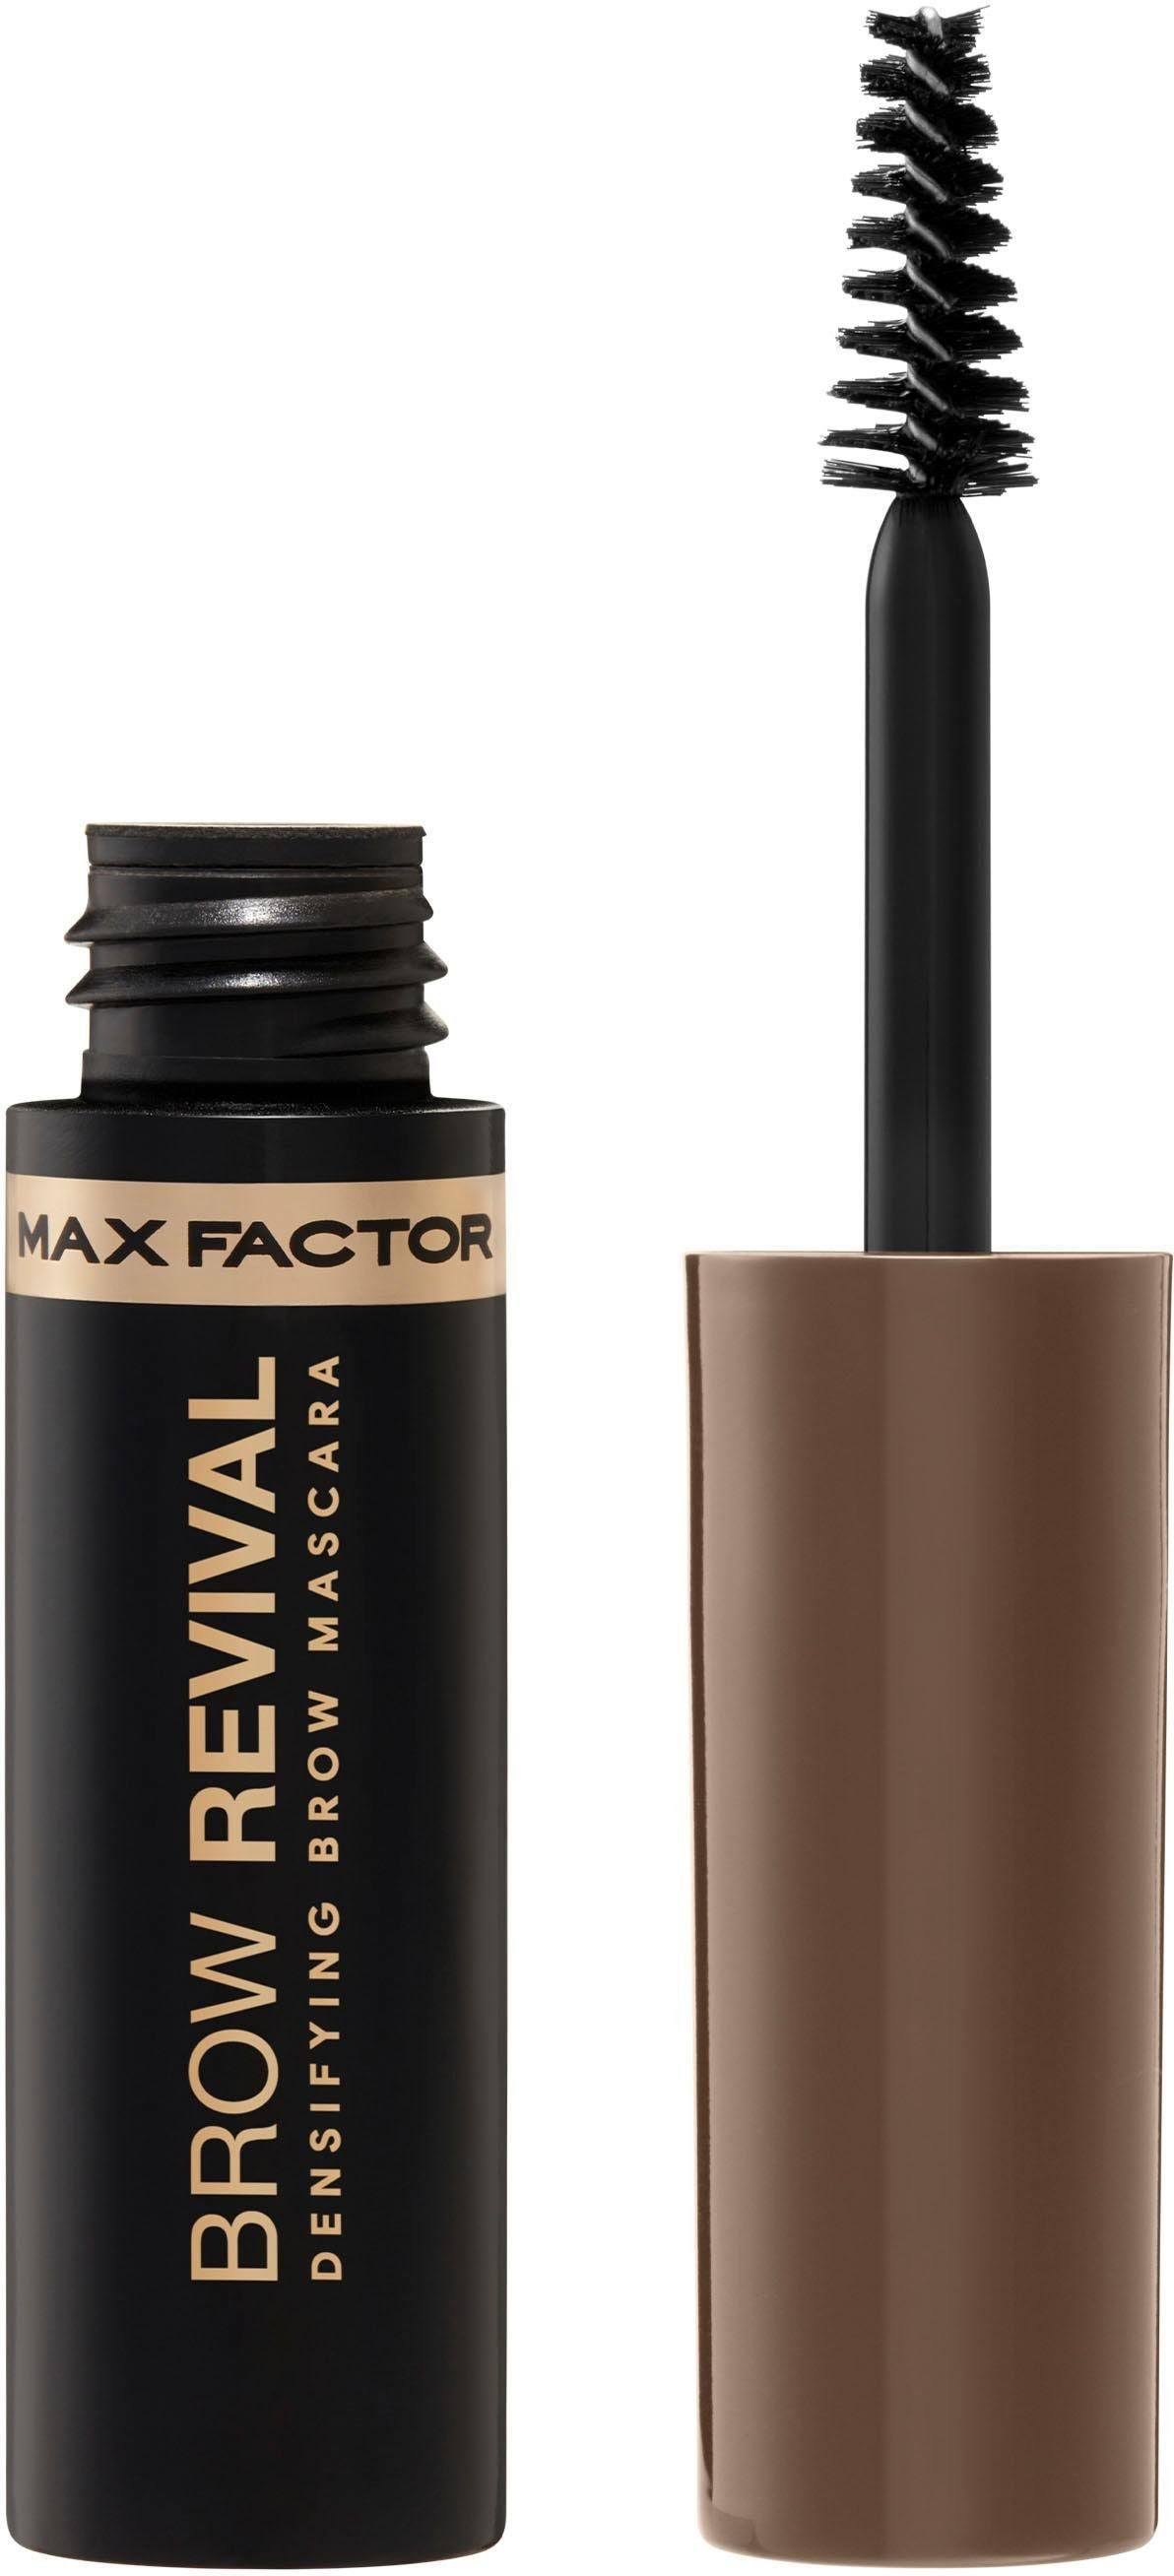 Max Factor Brow Revival Mascara - 002 Soft Brown